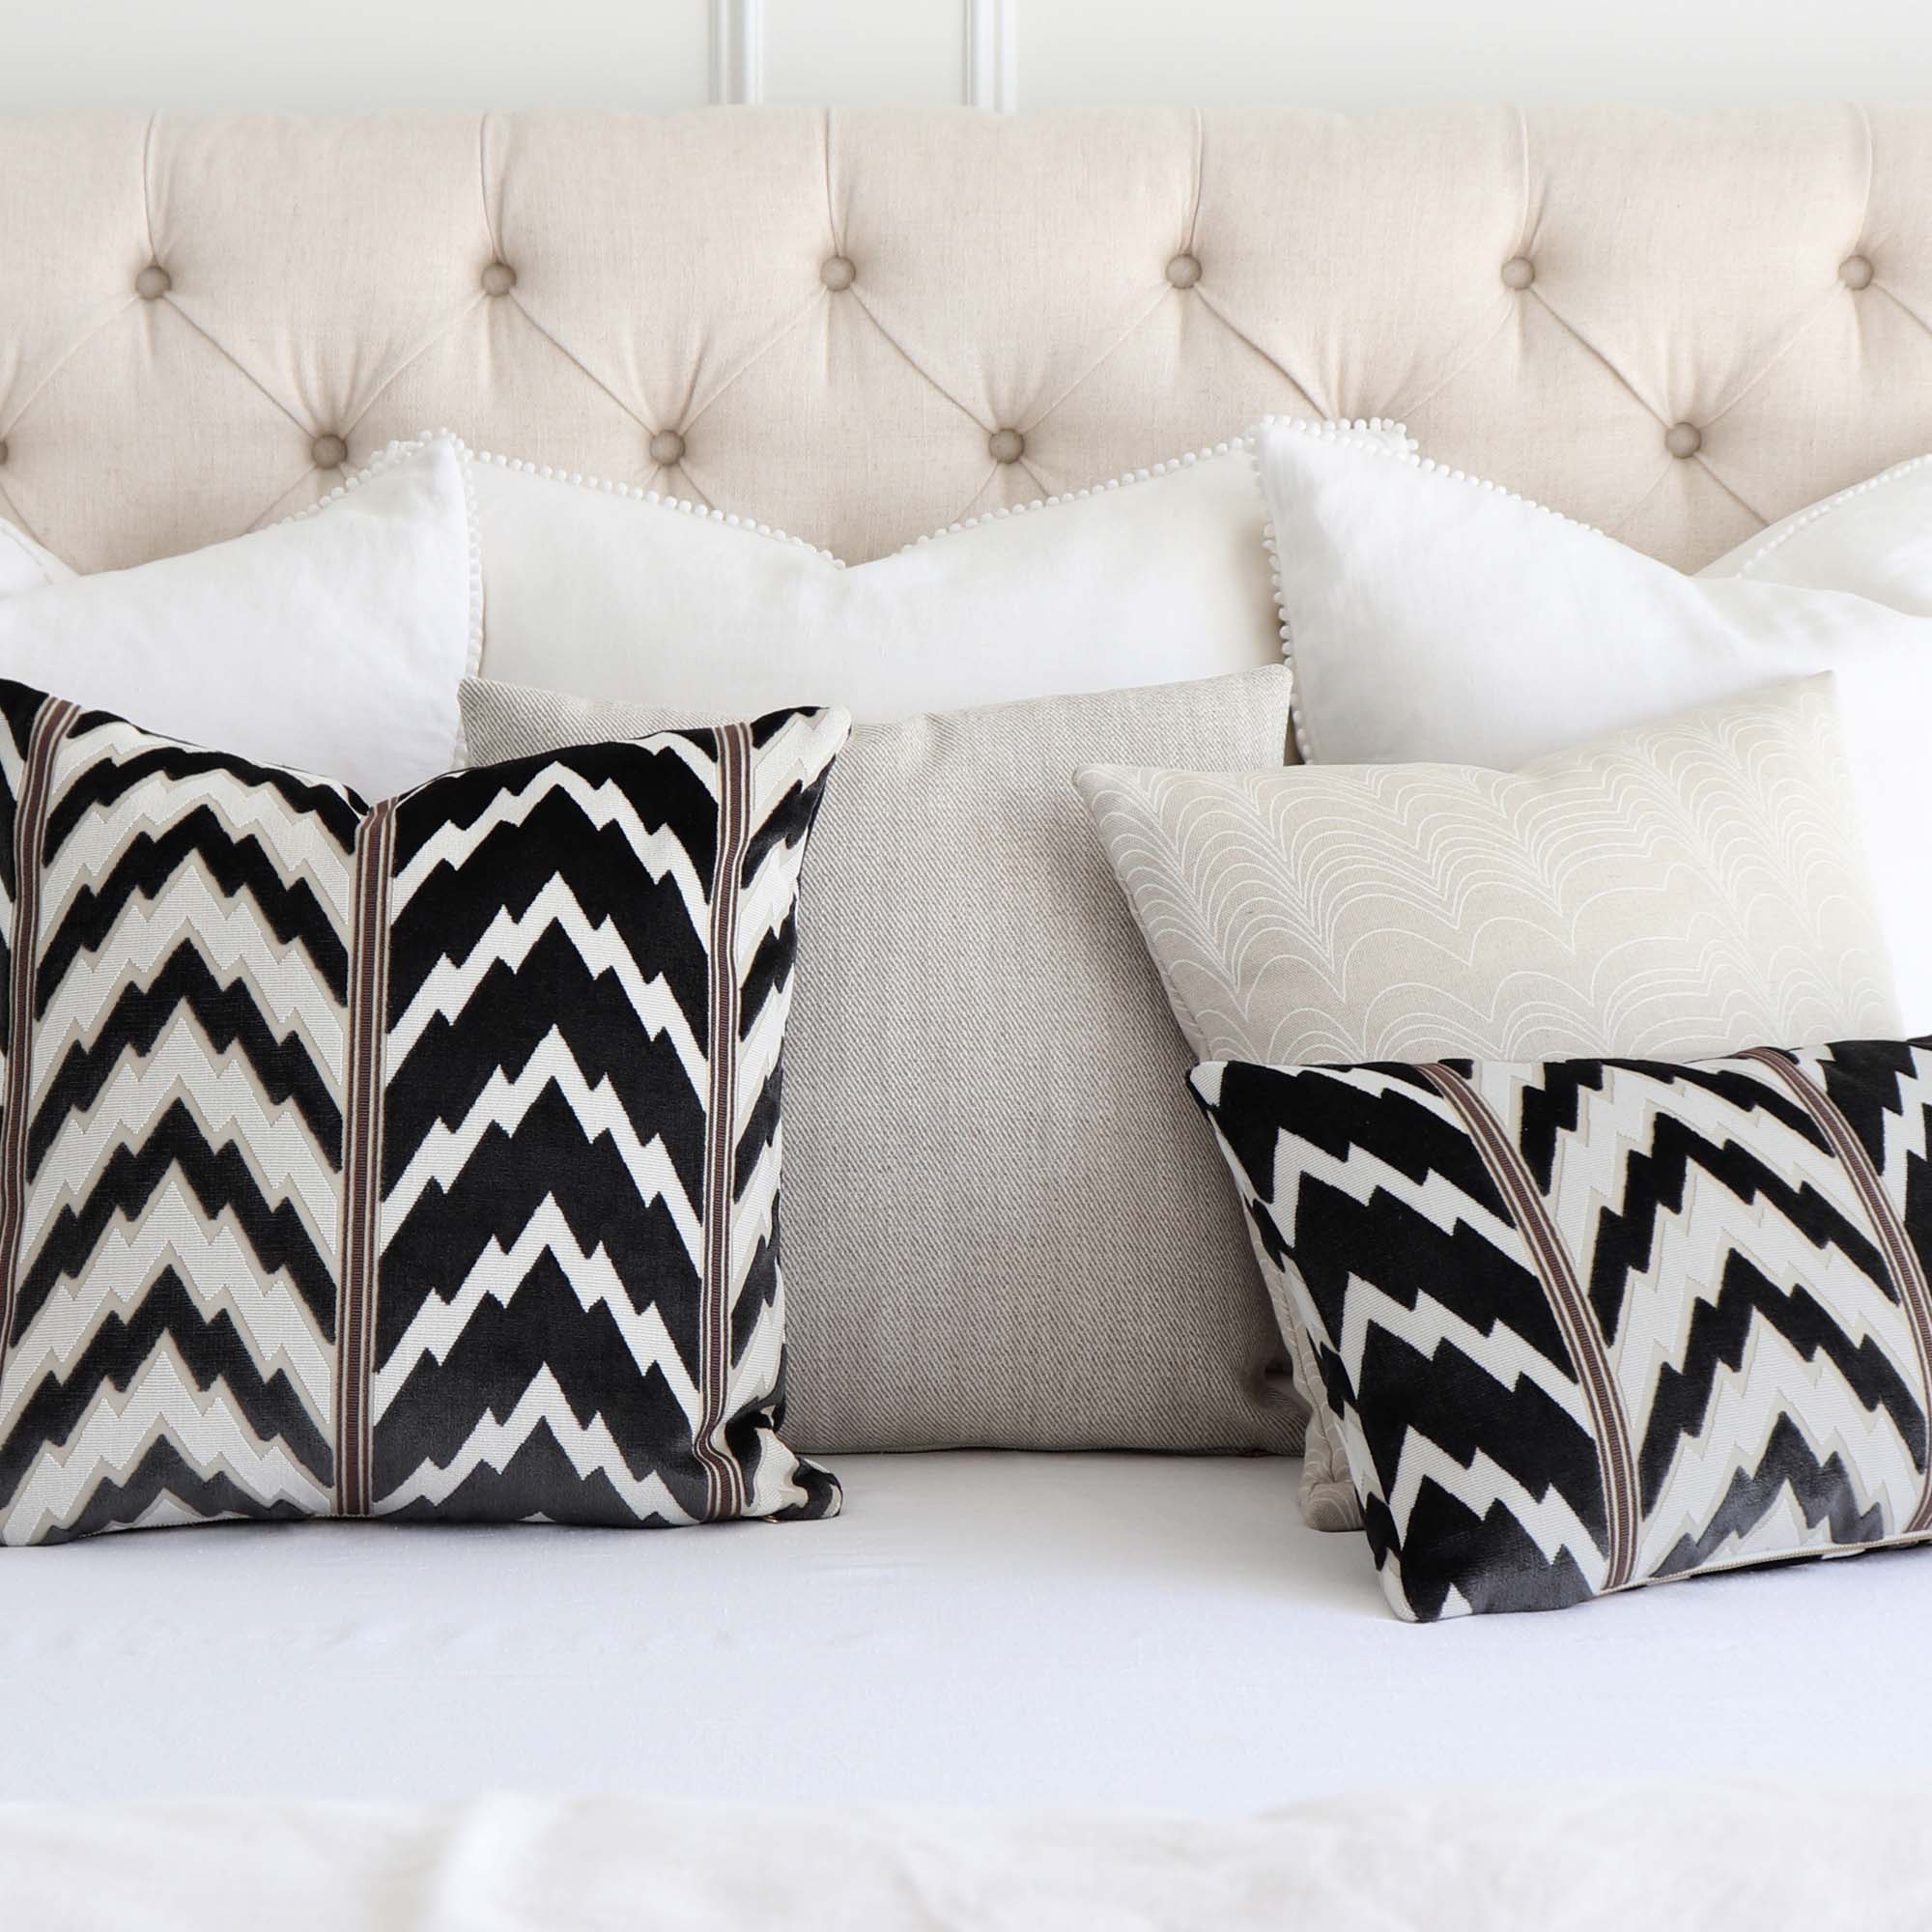 Schumacher Florentine Velvet Black Chevron Designer Luxury Decorative Throw Pillow Cover with Coordinating Throw Pillows